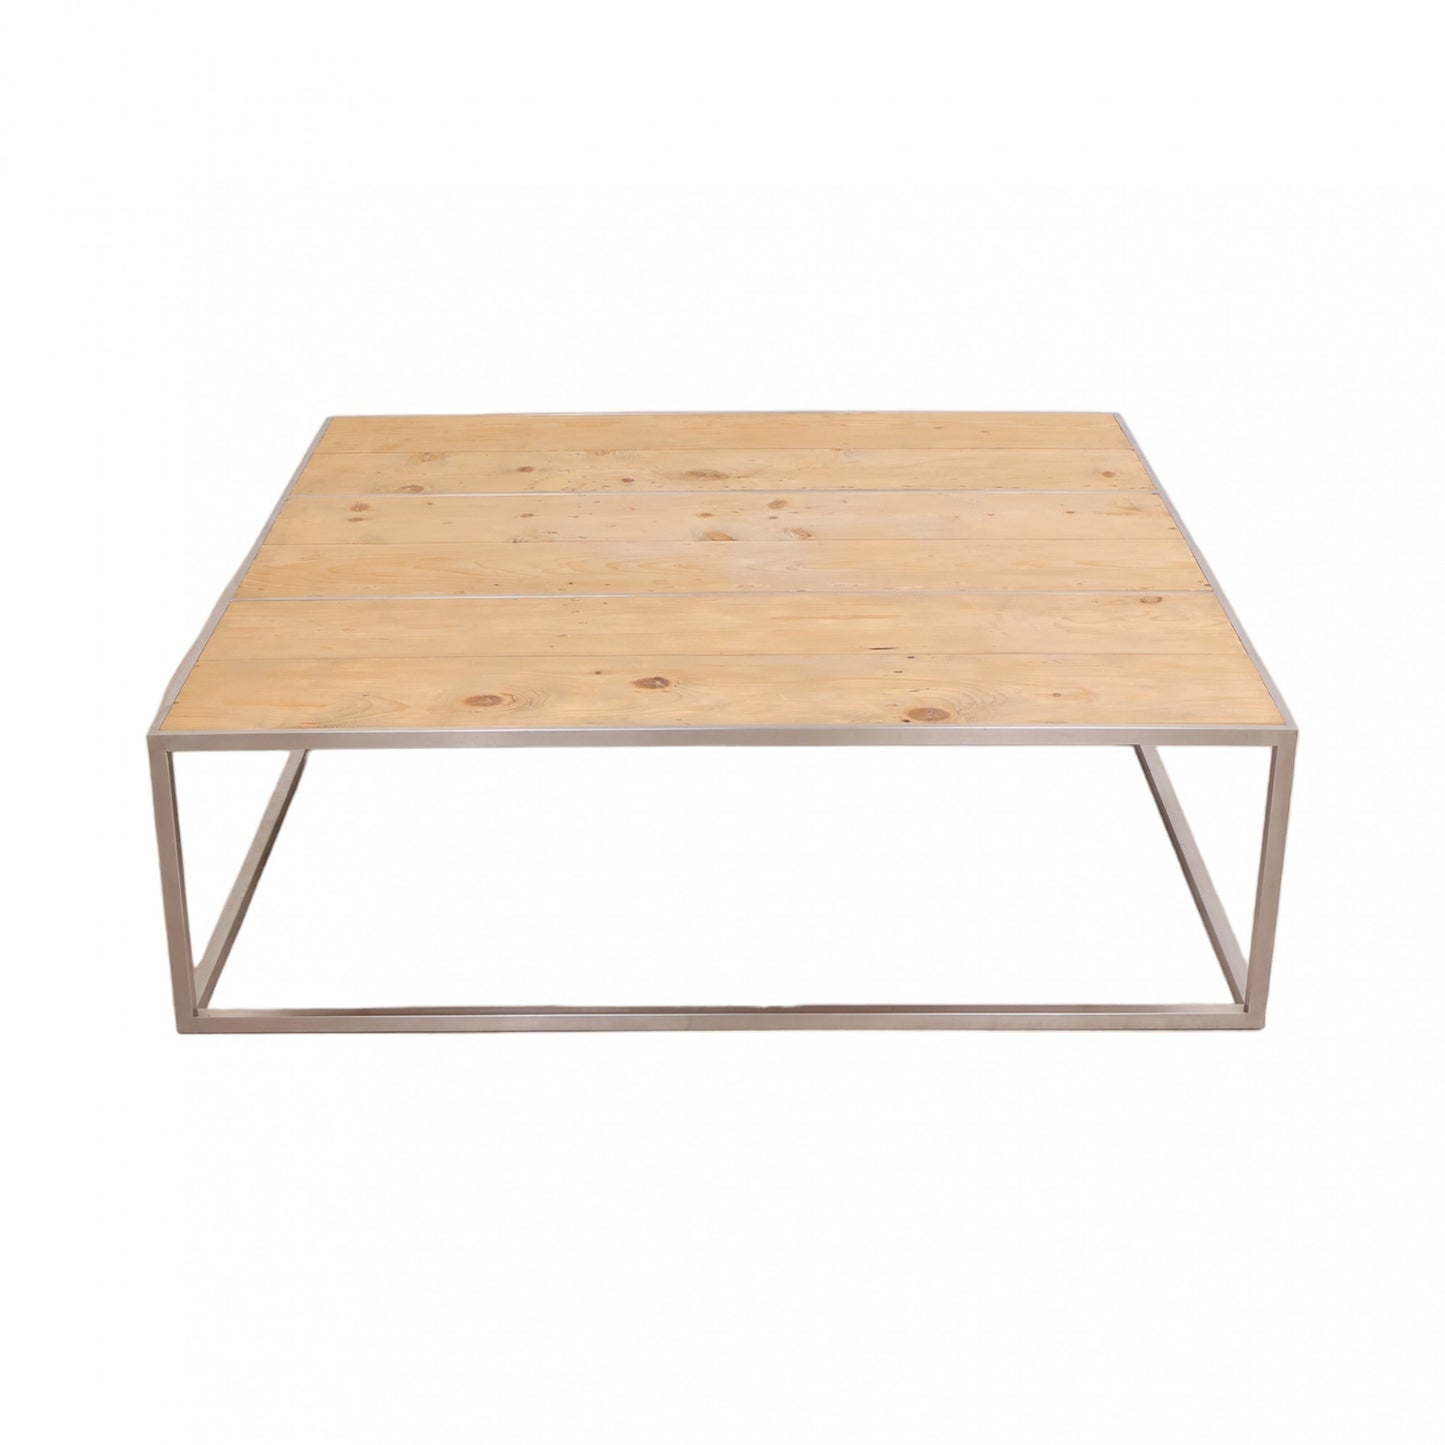 Artsome salongbord/stuebord med bordplate av tre i kvadratisk form